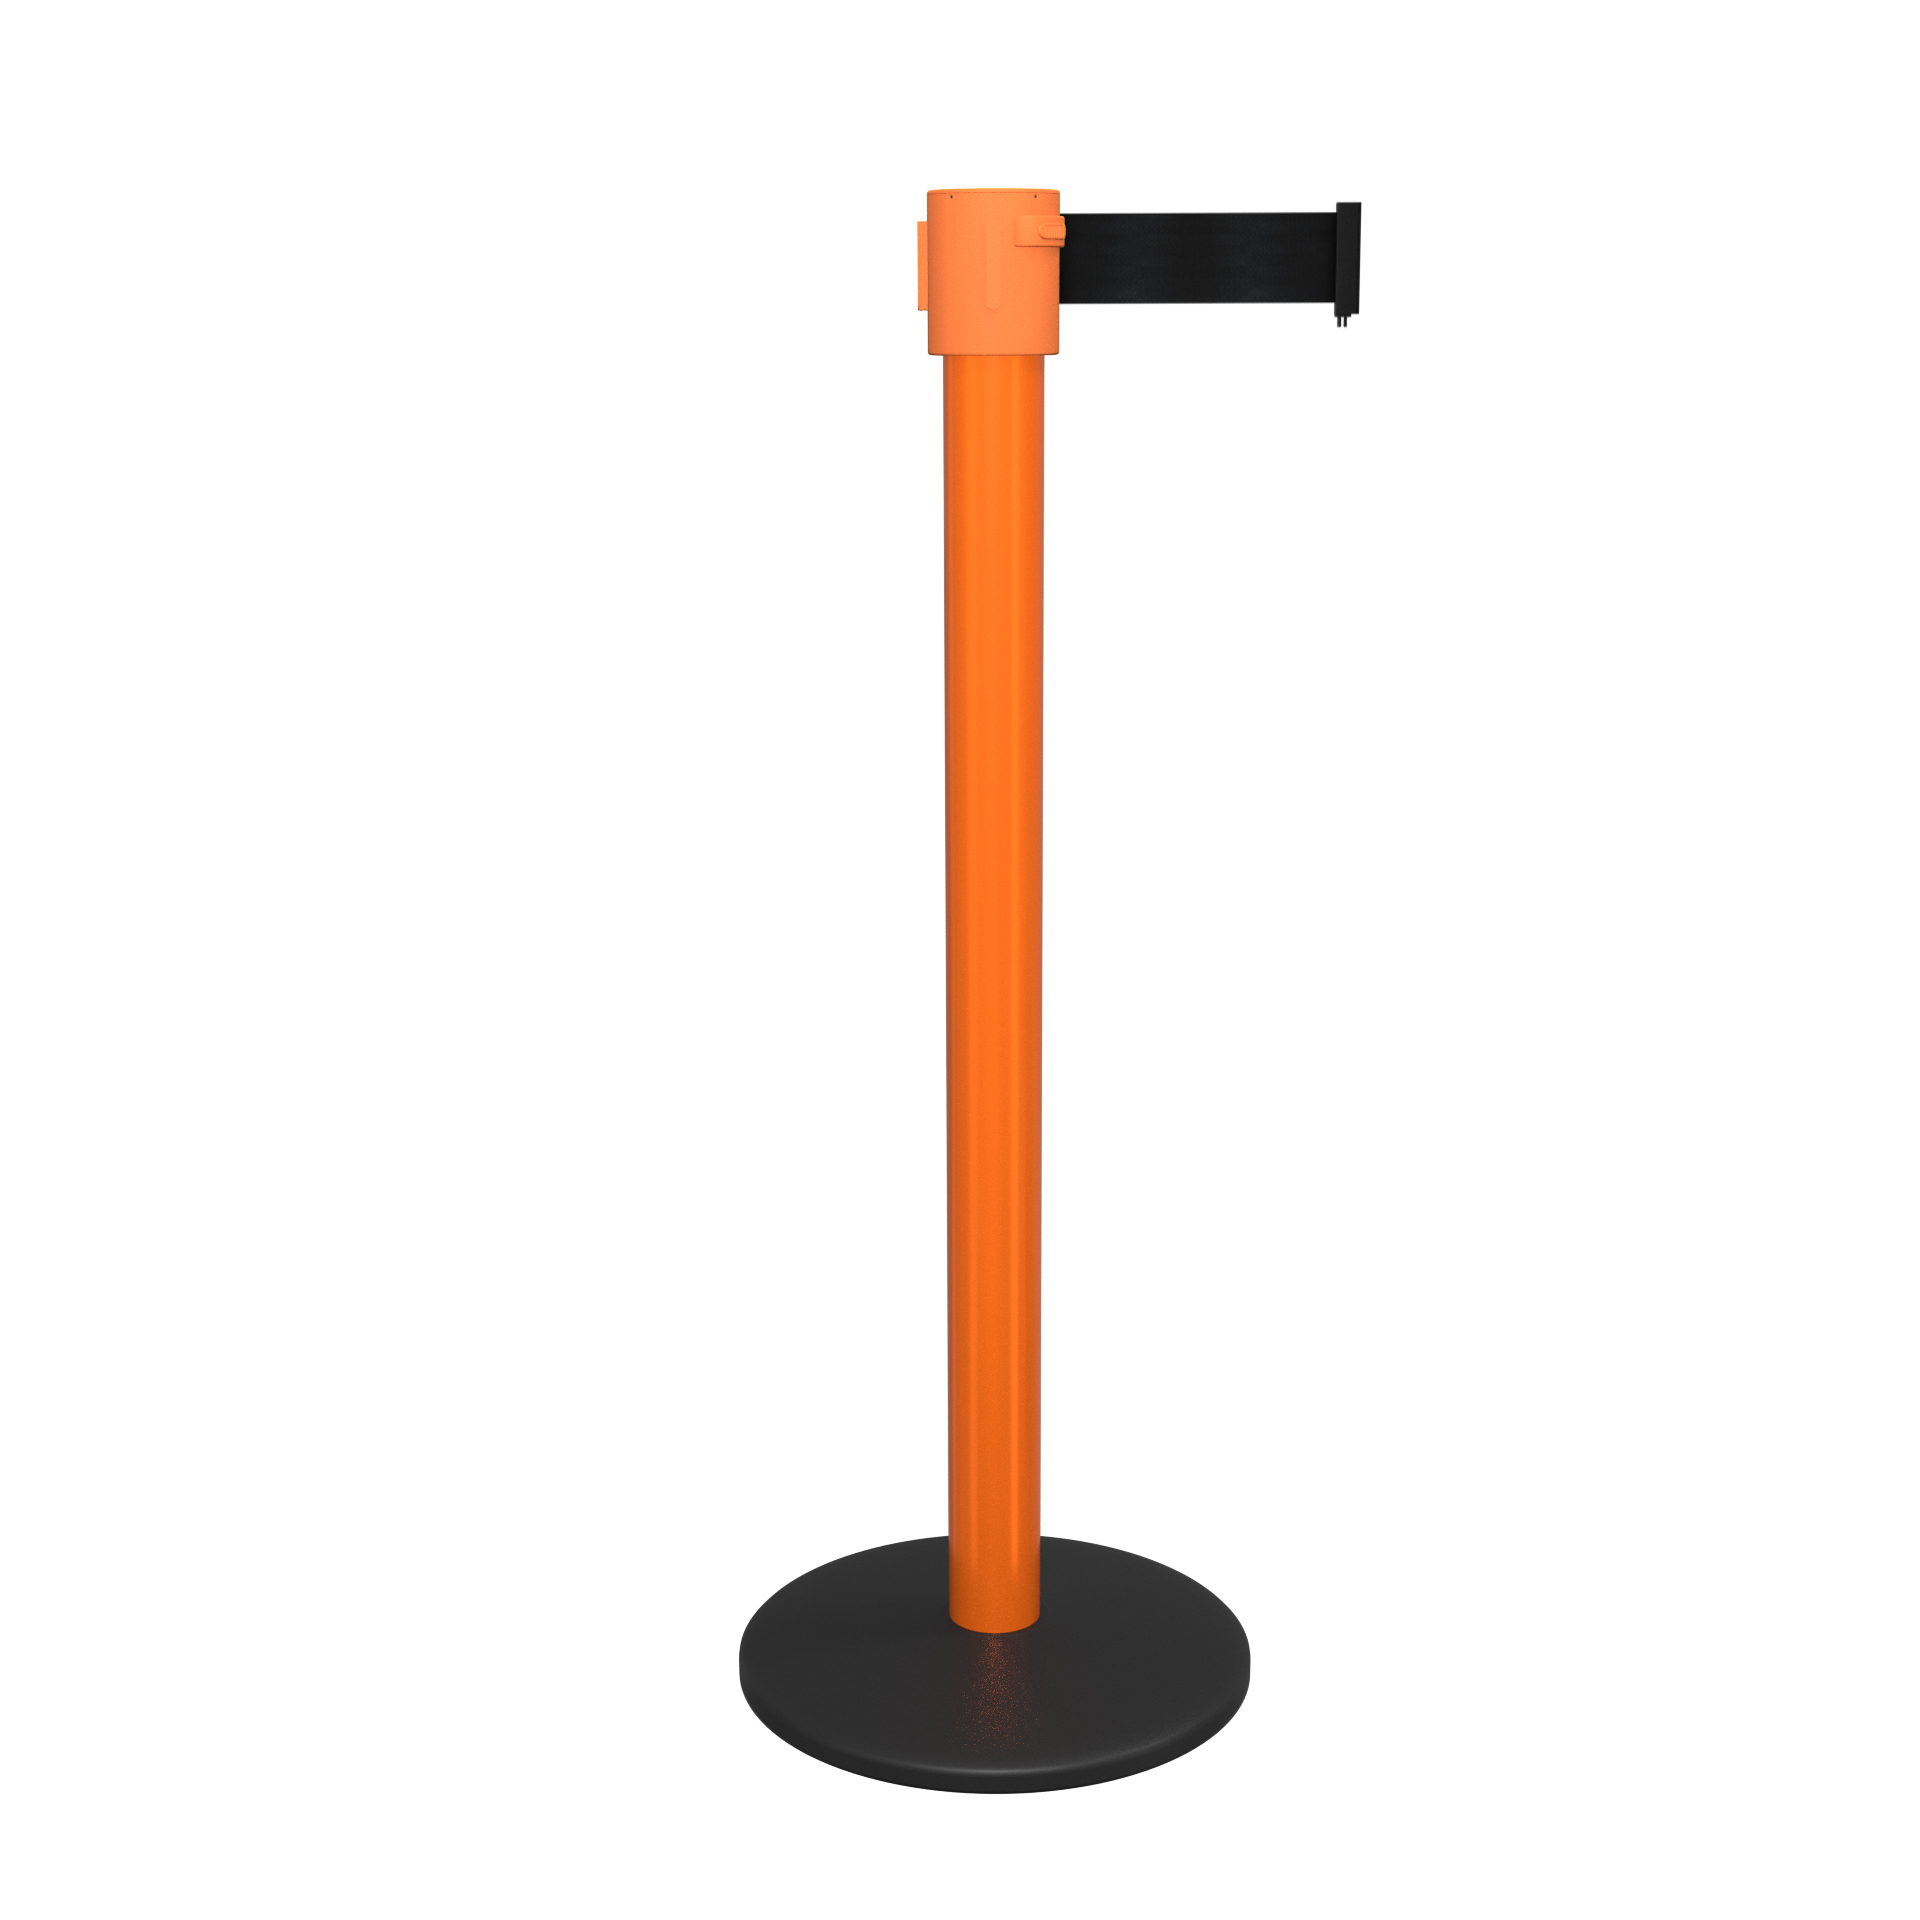 Orange SafetyPro 335 Retractable Belt Barrier